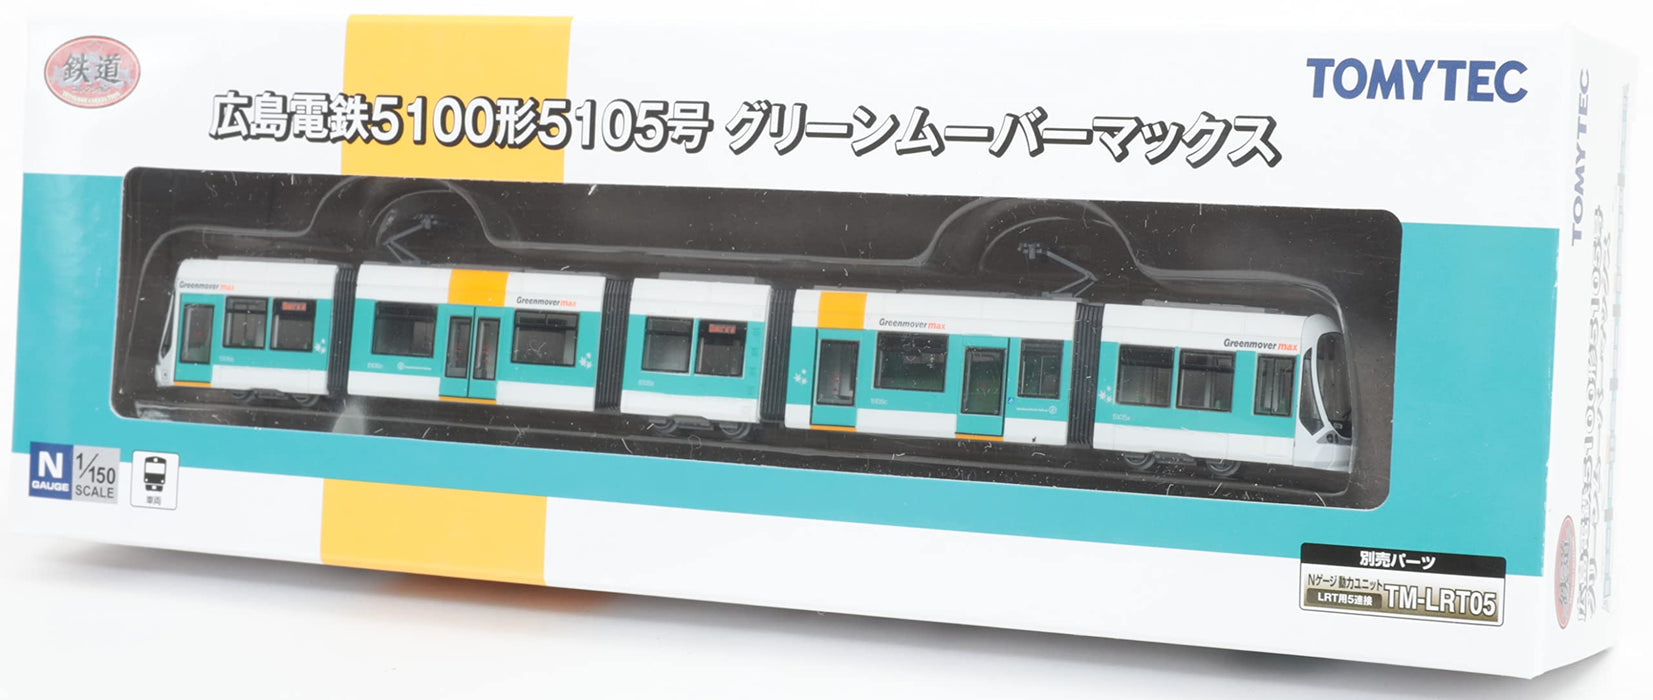 Tomytec 5100 No. 5105 Green Mover Max Hiroshima Railway Diorama Model 316589